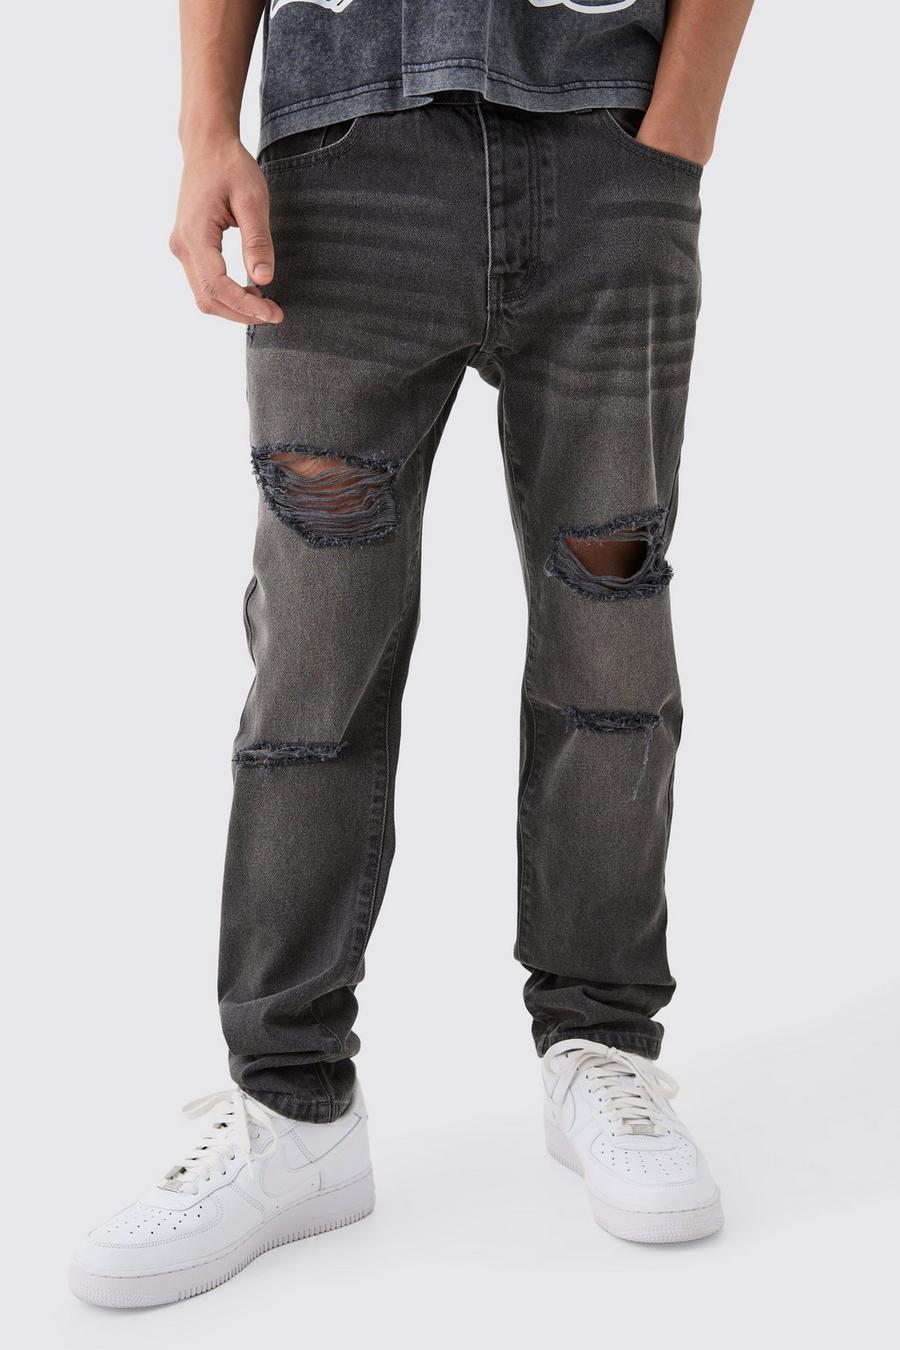 Jeans Slim Fit in denim rigido color antracite con strappi all over, Charcoal image number 1